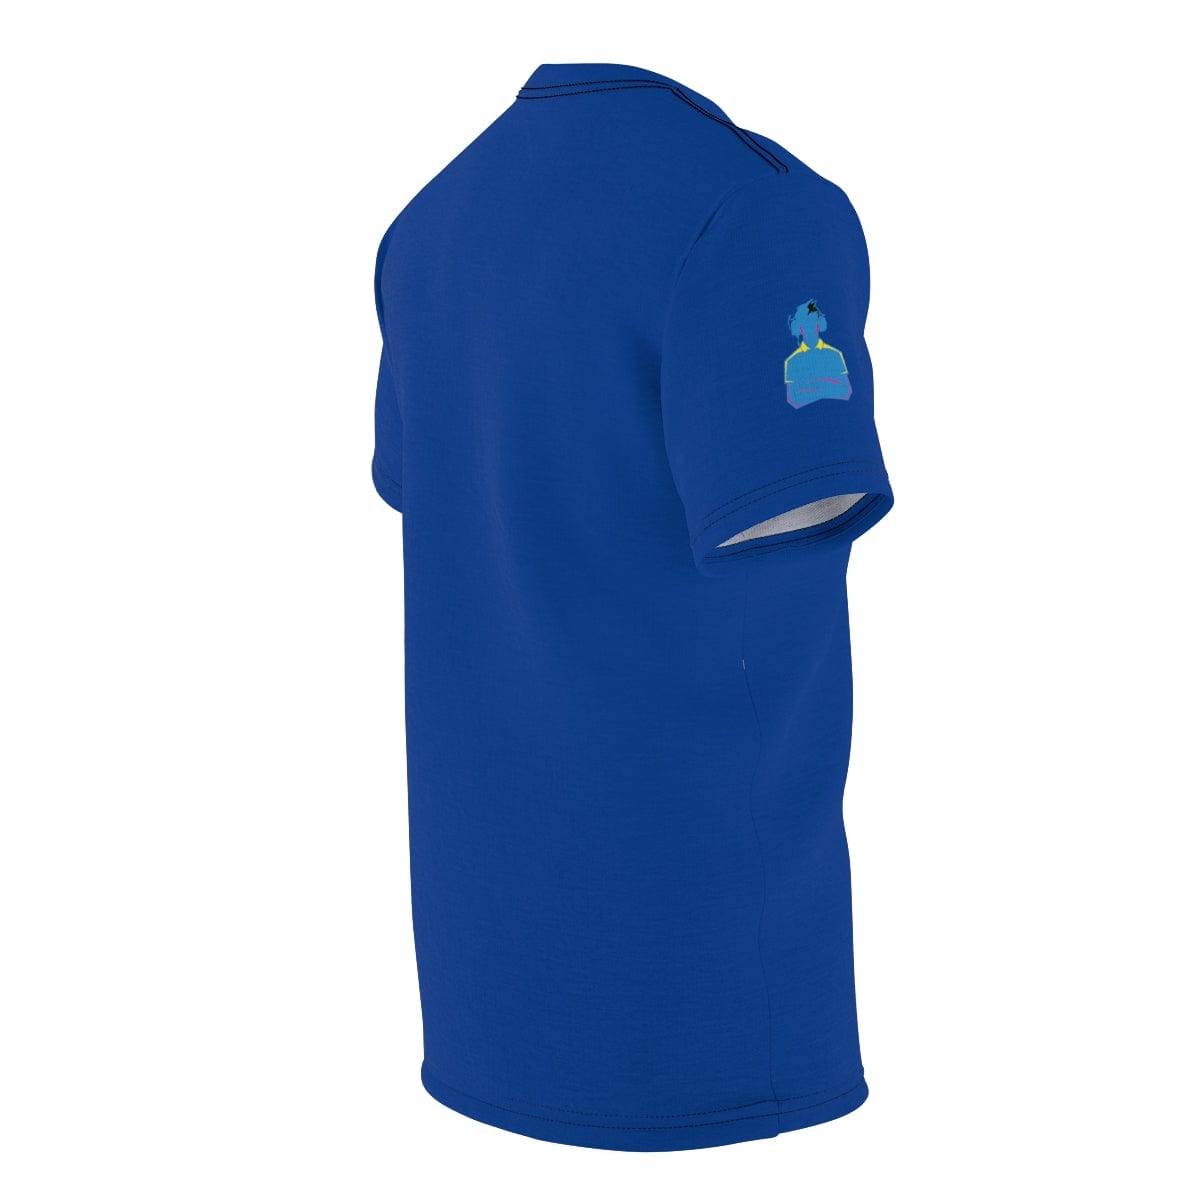 The All Premium Heart Energy Bar Royal Blue Unisex Cut & Sew T -Shirt